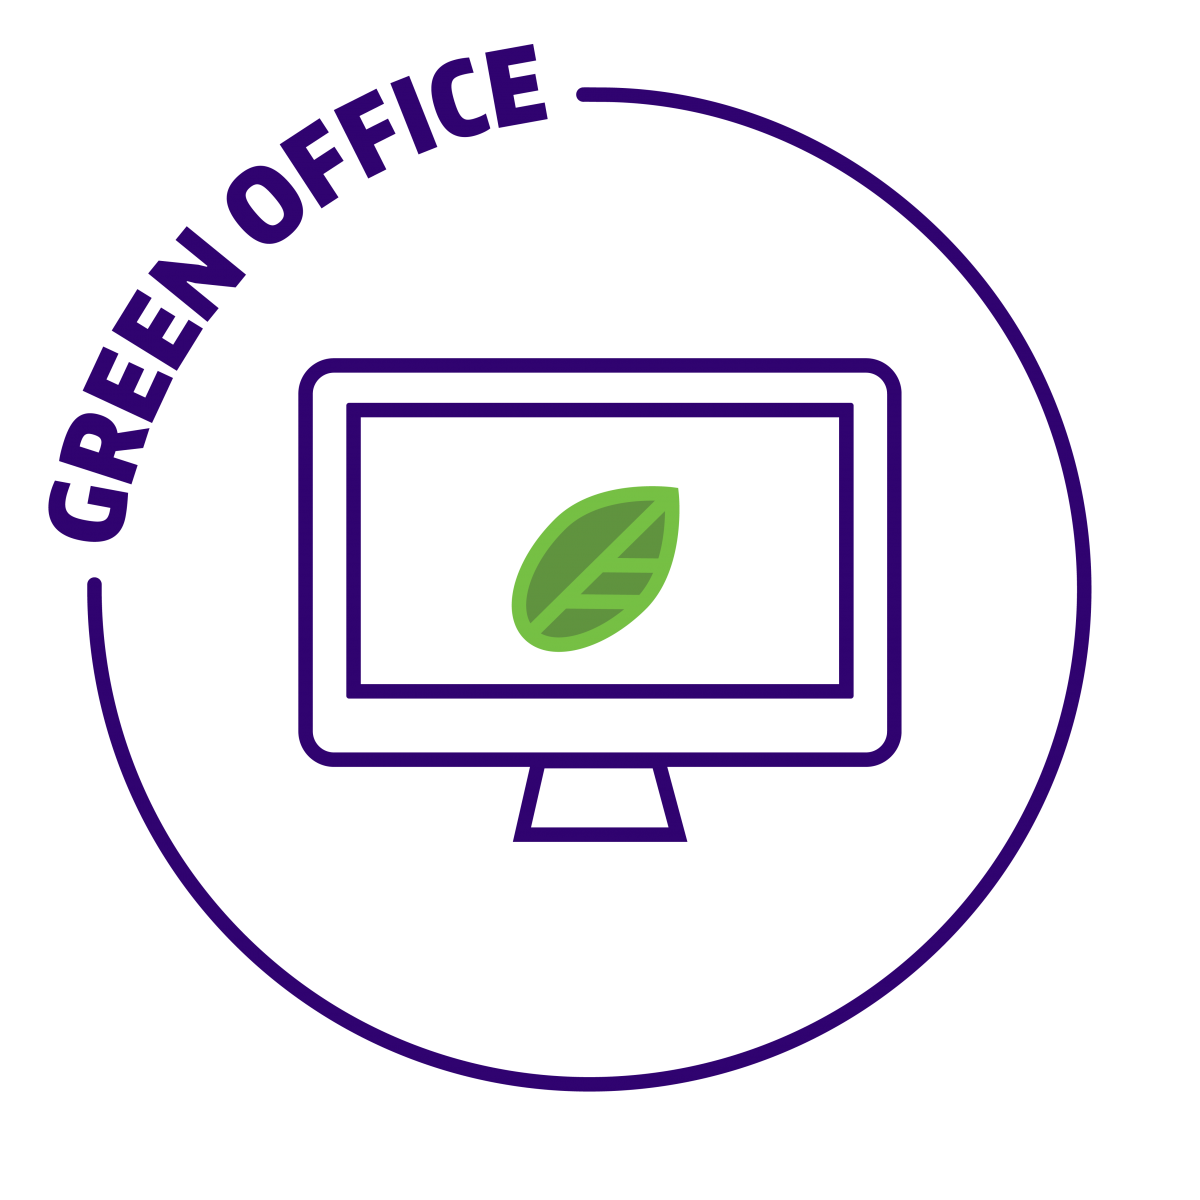 Green Office program logo